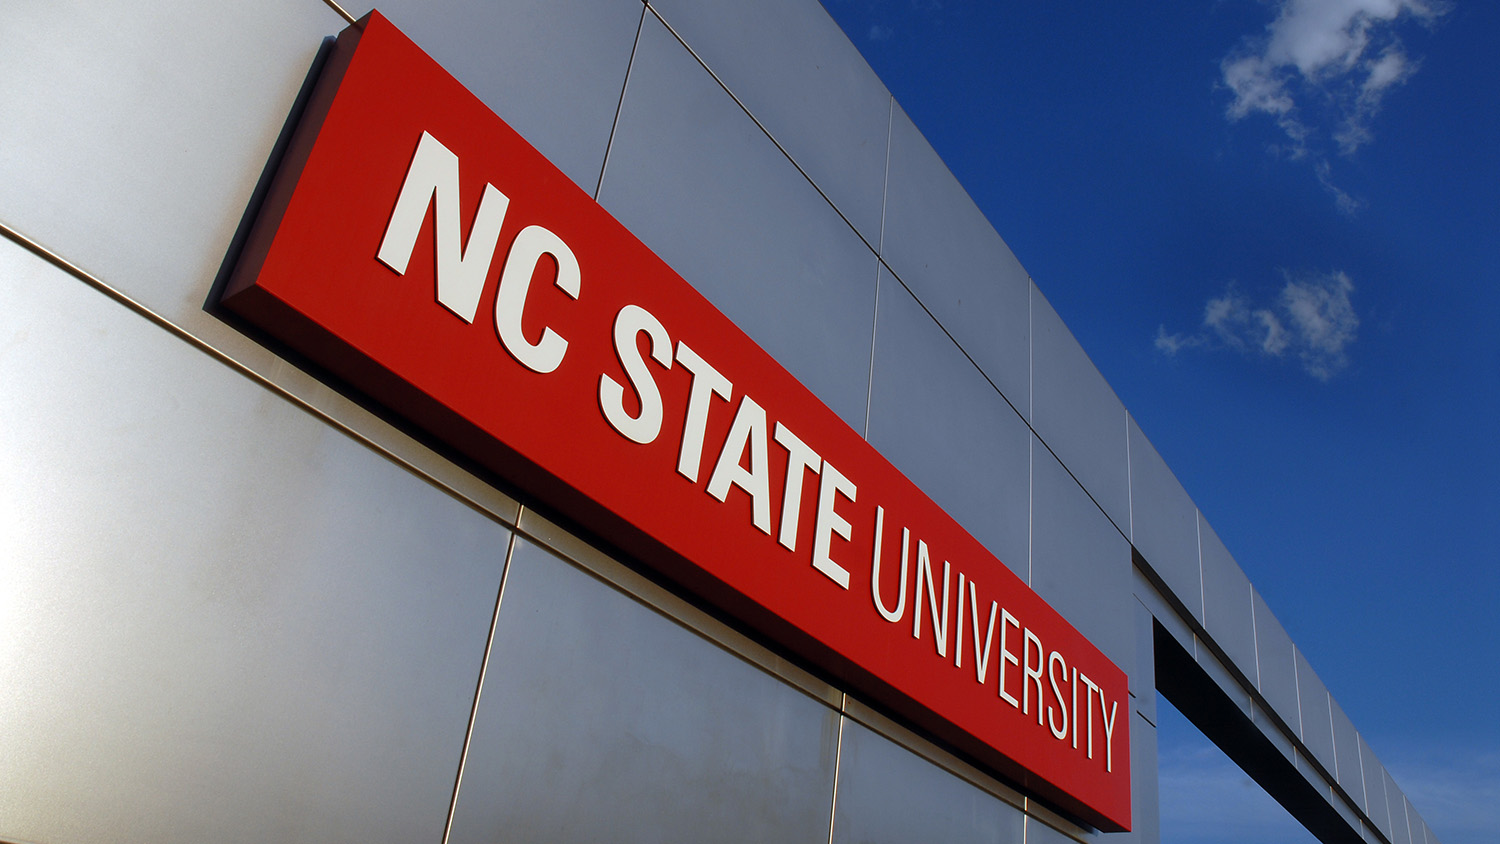 NC State’s campus gateway